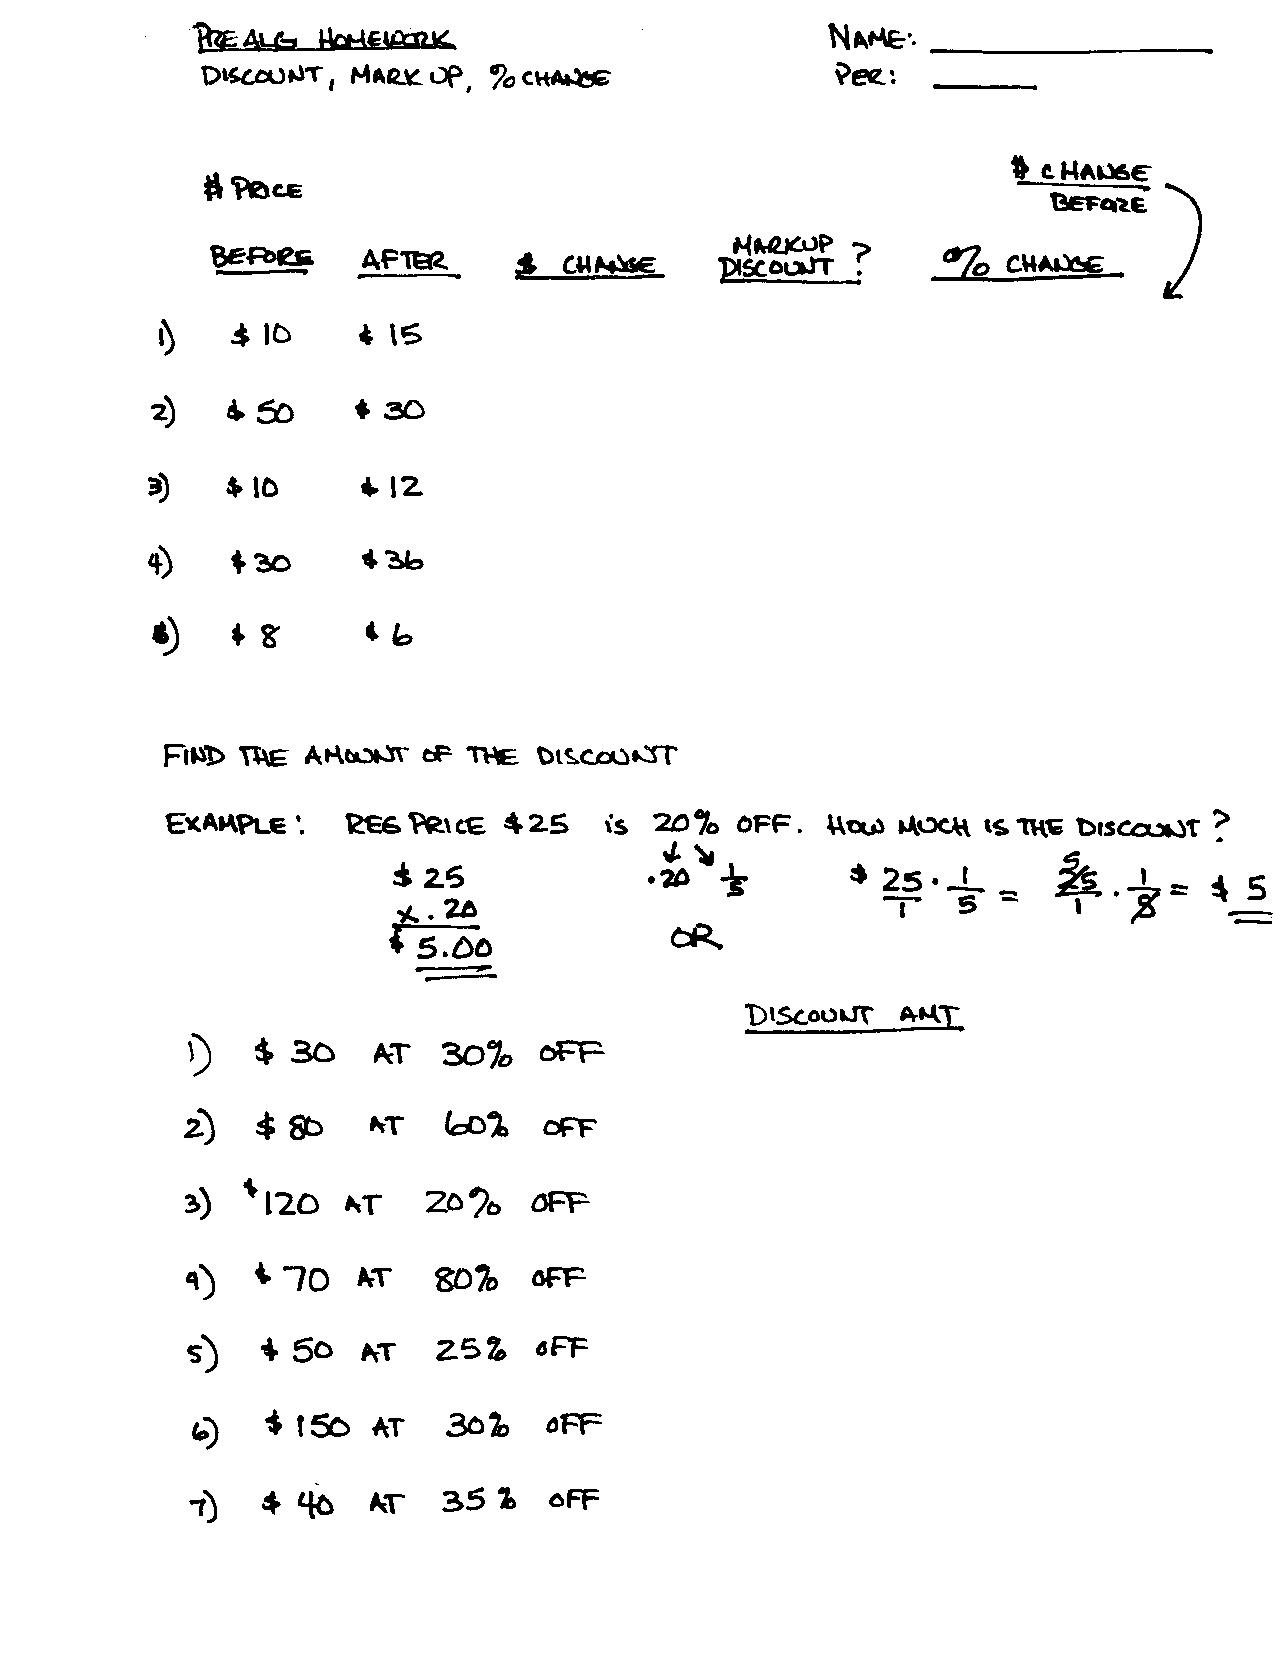 6th-grade-math-multiple-representations-worksheet-free-printable